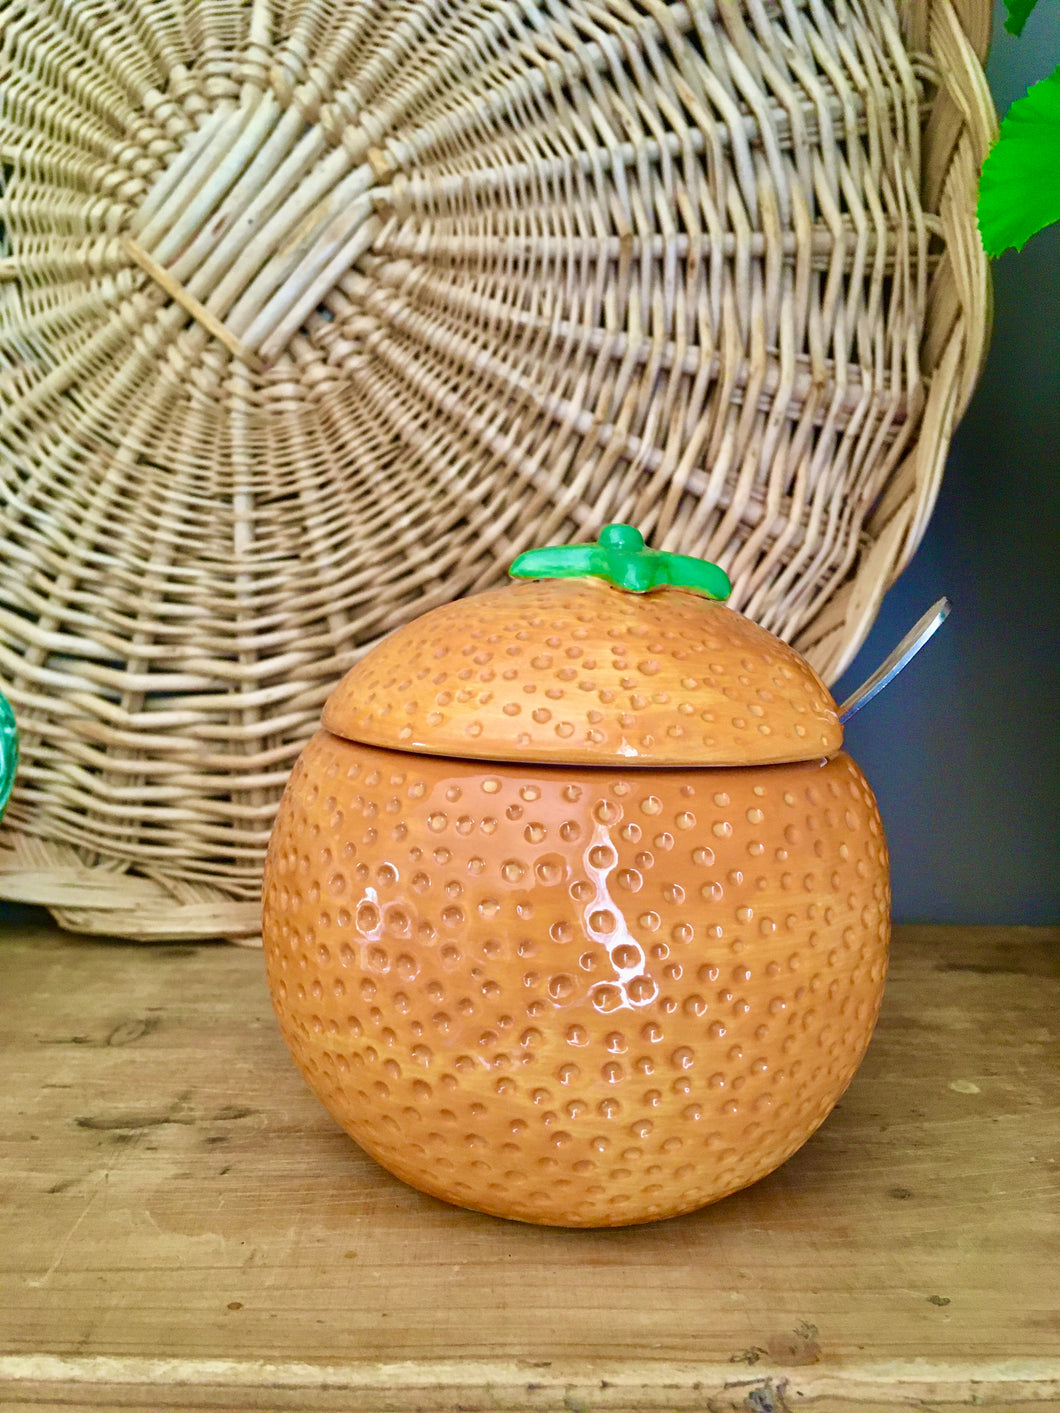 Limited Edition marmalade pot by ceramicist Charlotte Cadzow for Edinburgh Preserves